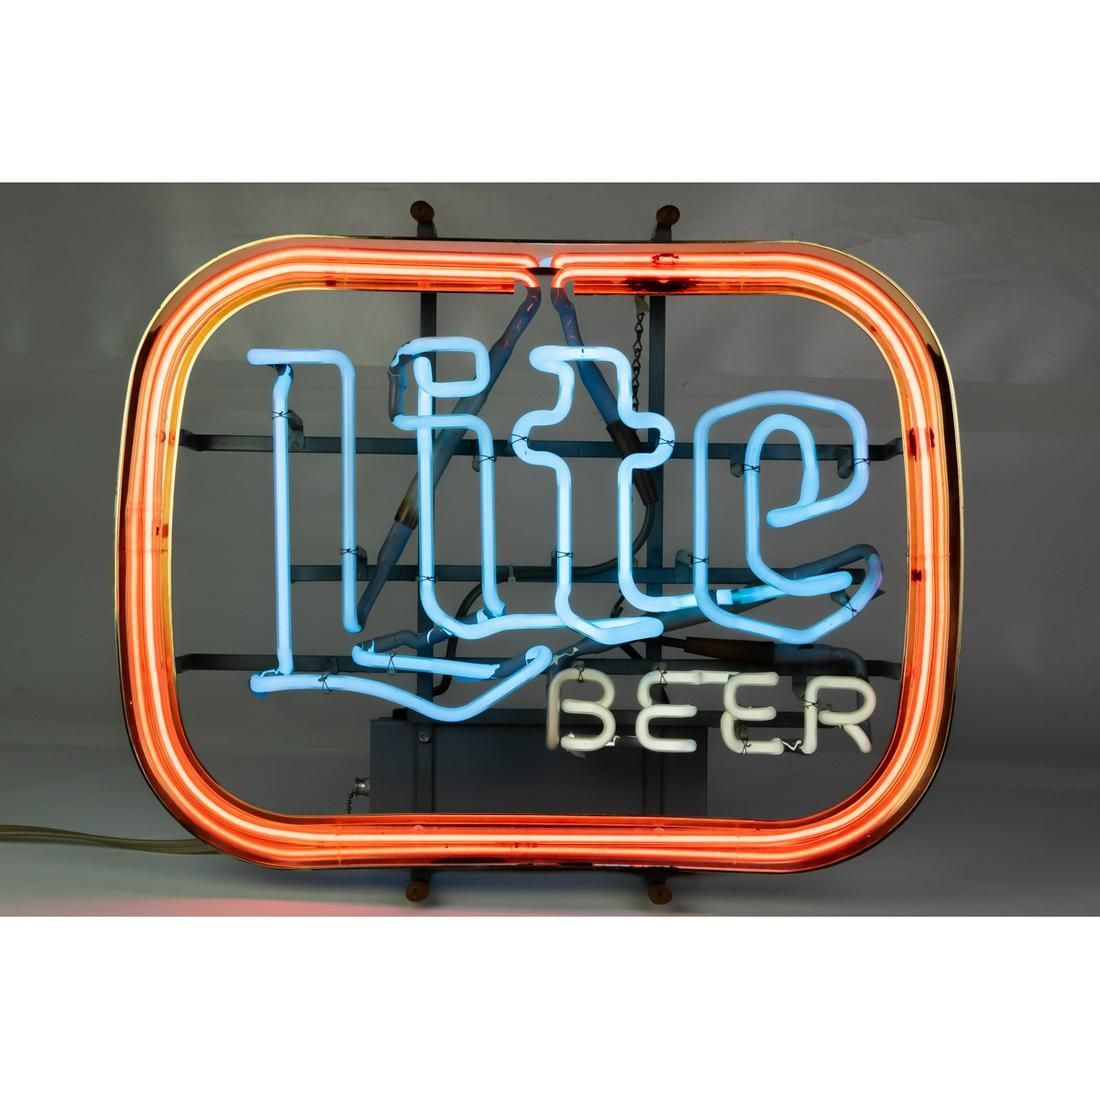 Original Vintage Miller Lite Beer Neon Sign Original vintage Miller Lite Beer ne&hellip;